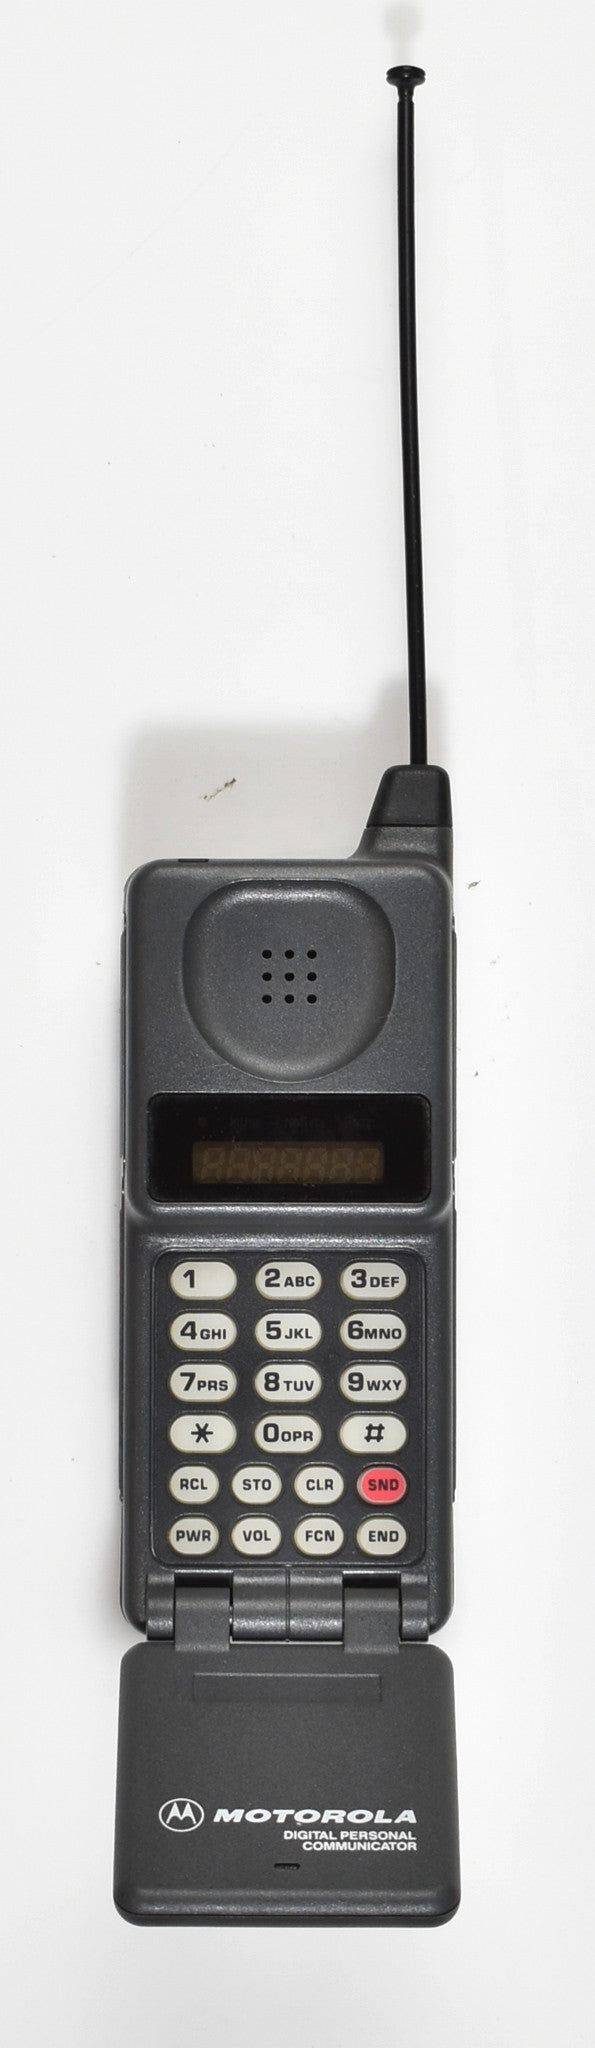 Brick Cell Phone Motorola Original Phone 02